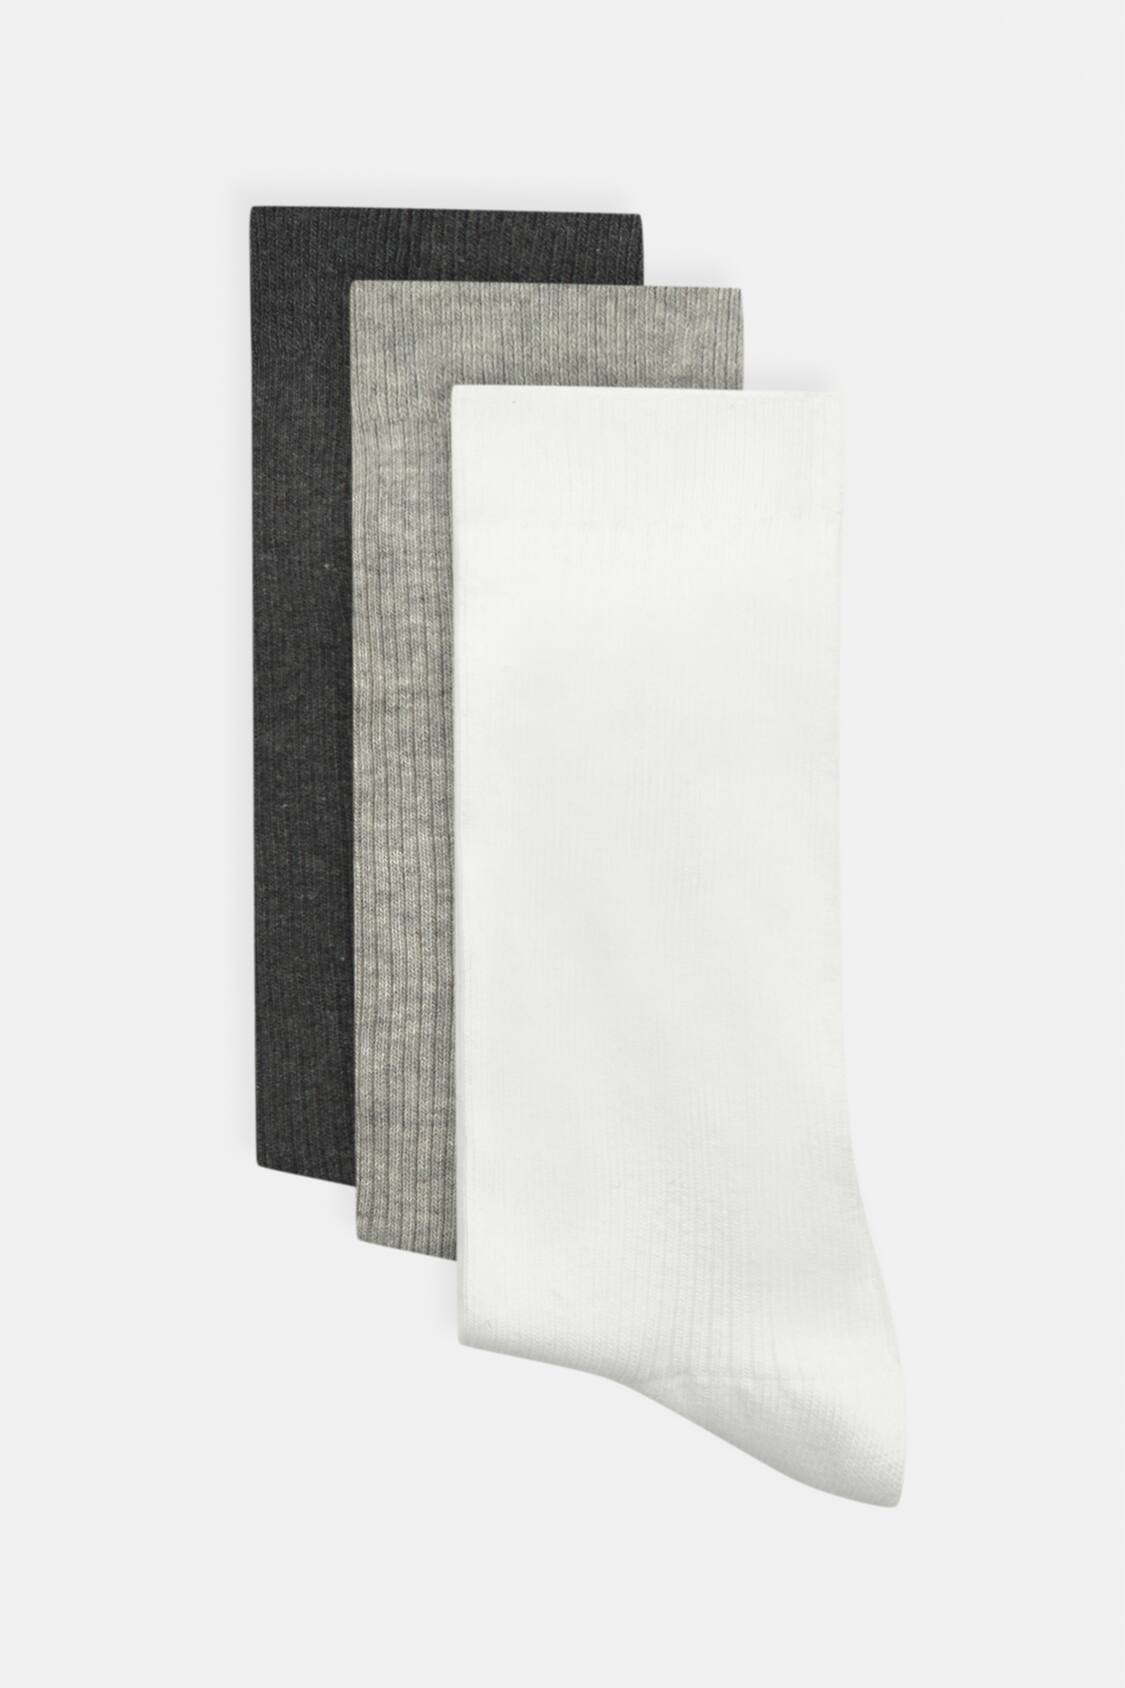 Pack de 2 calcetines bajos invisibles negros Light Coton para mujer